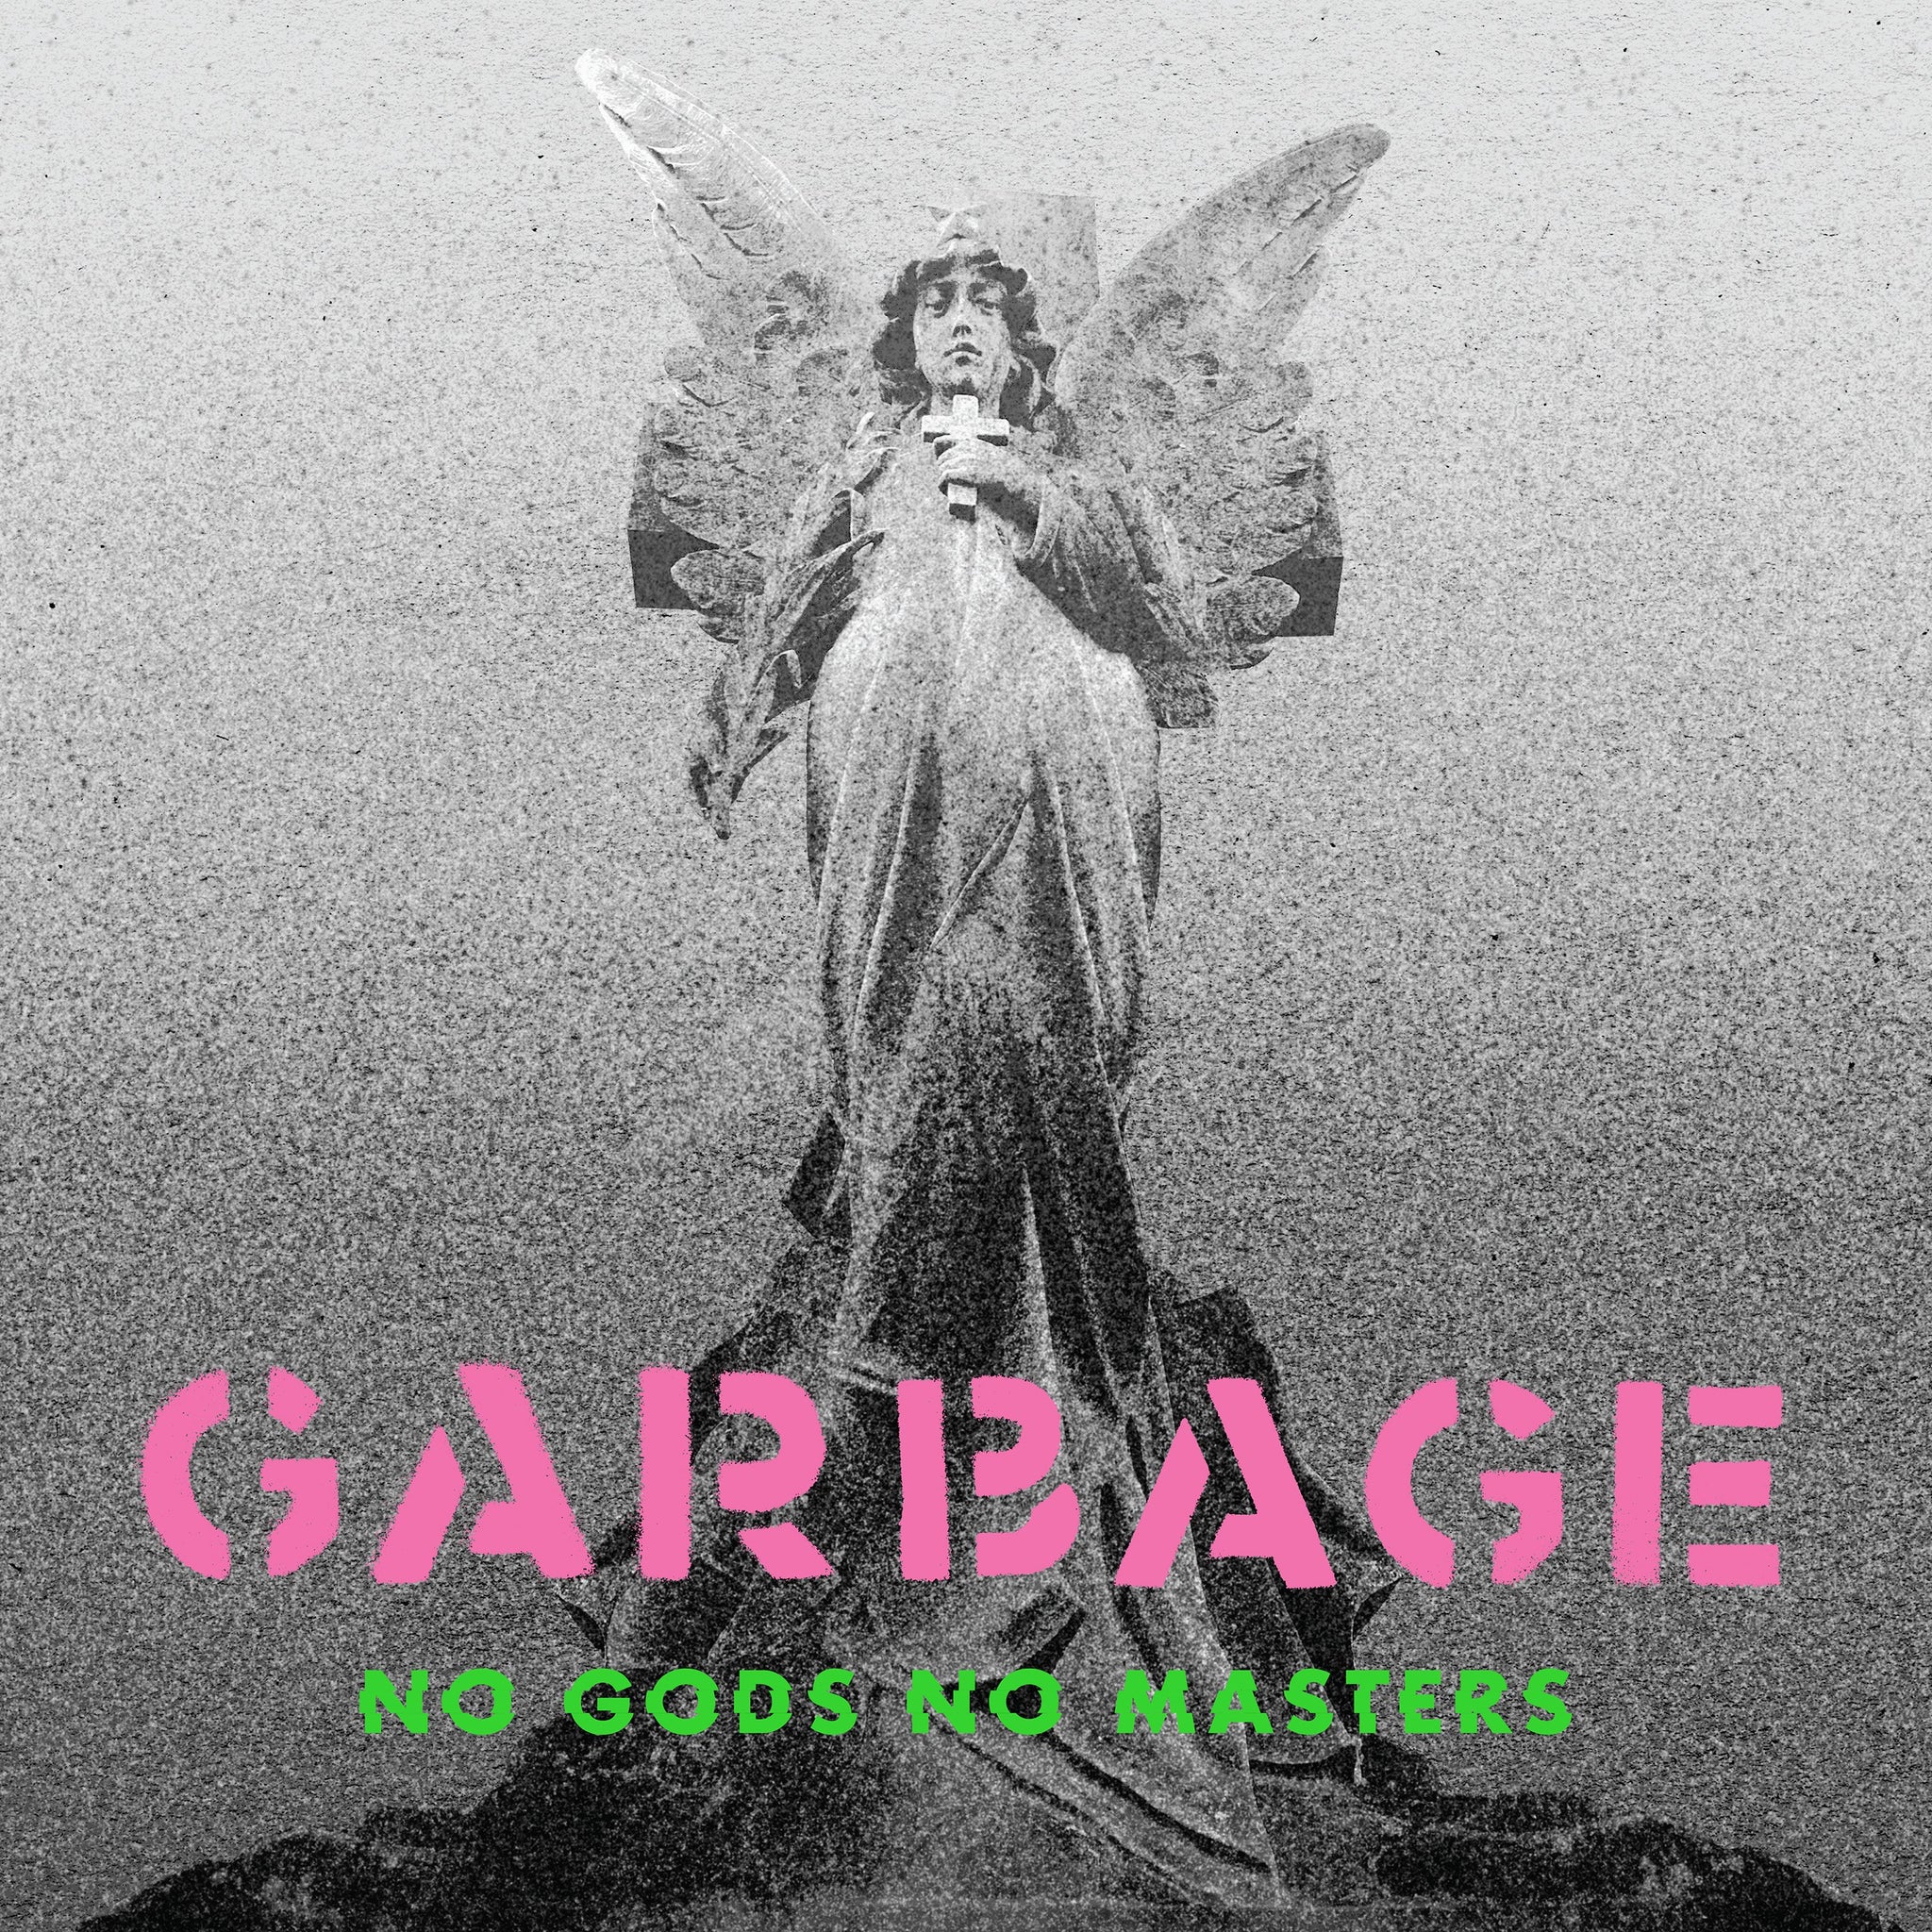 Garbage “No Gods No Masters” Pink LP (RSD 2021)